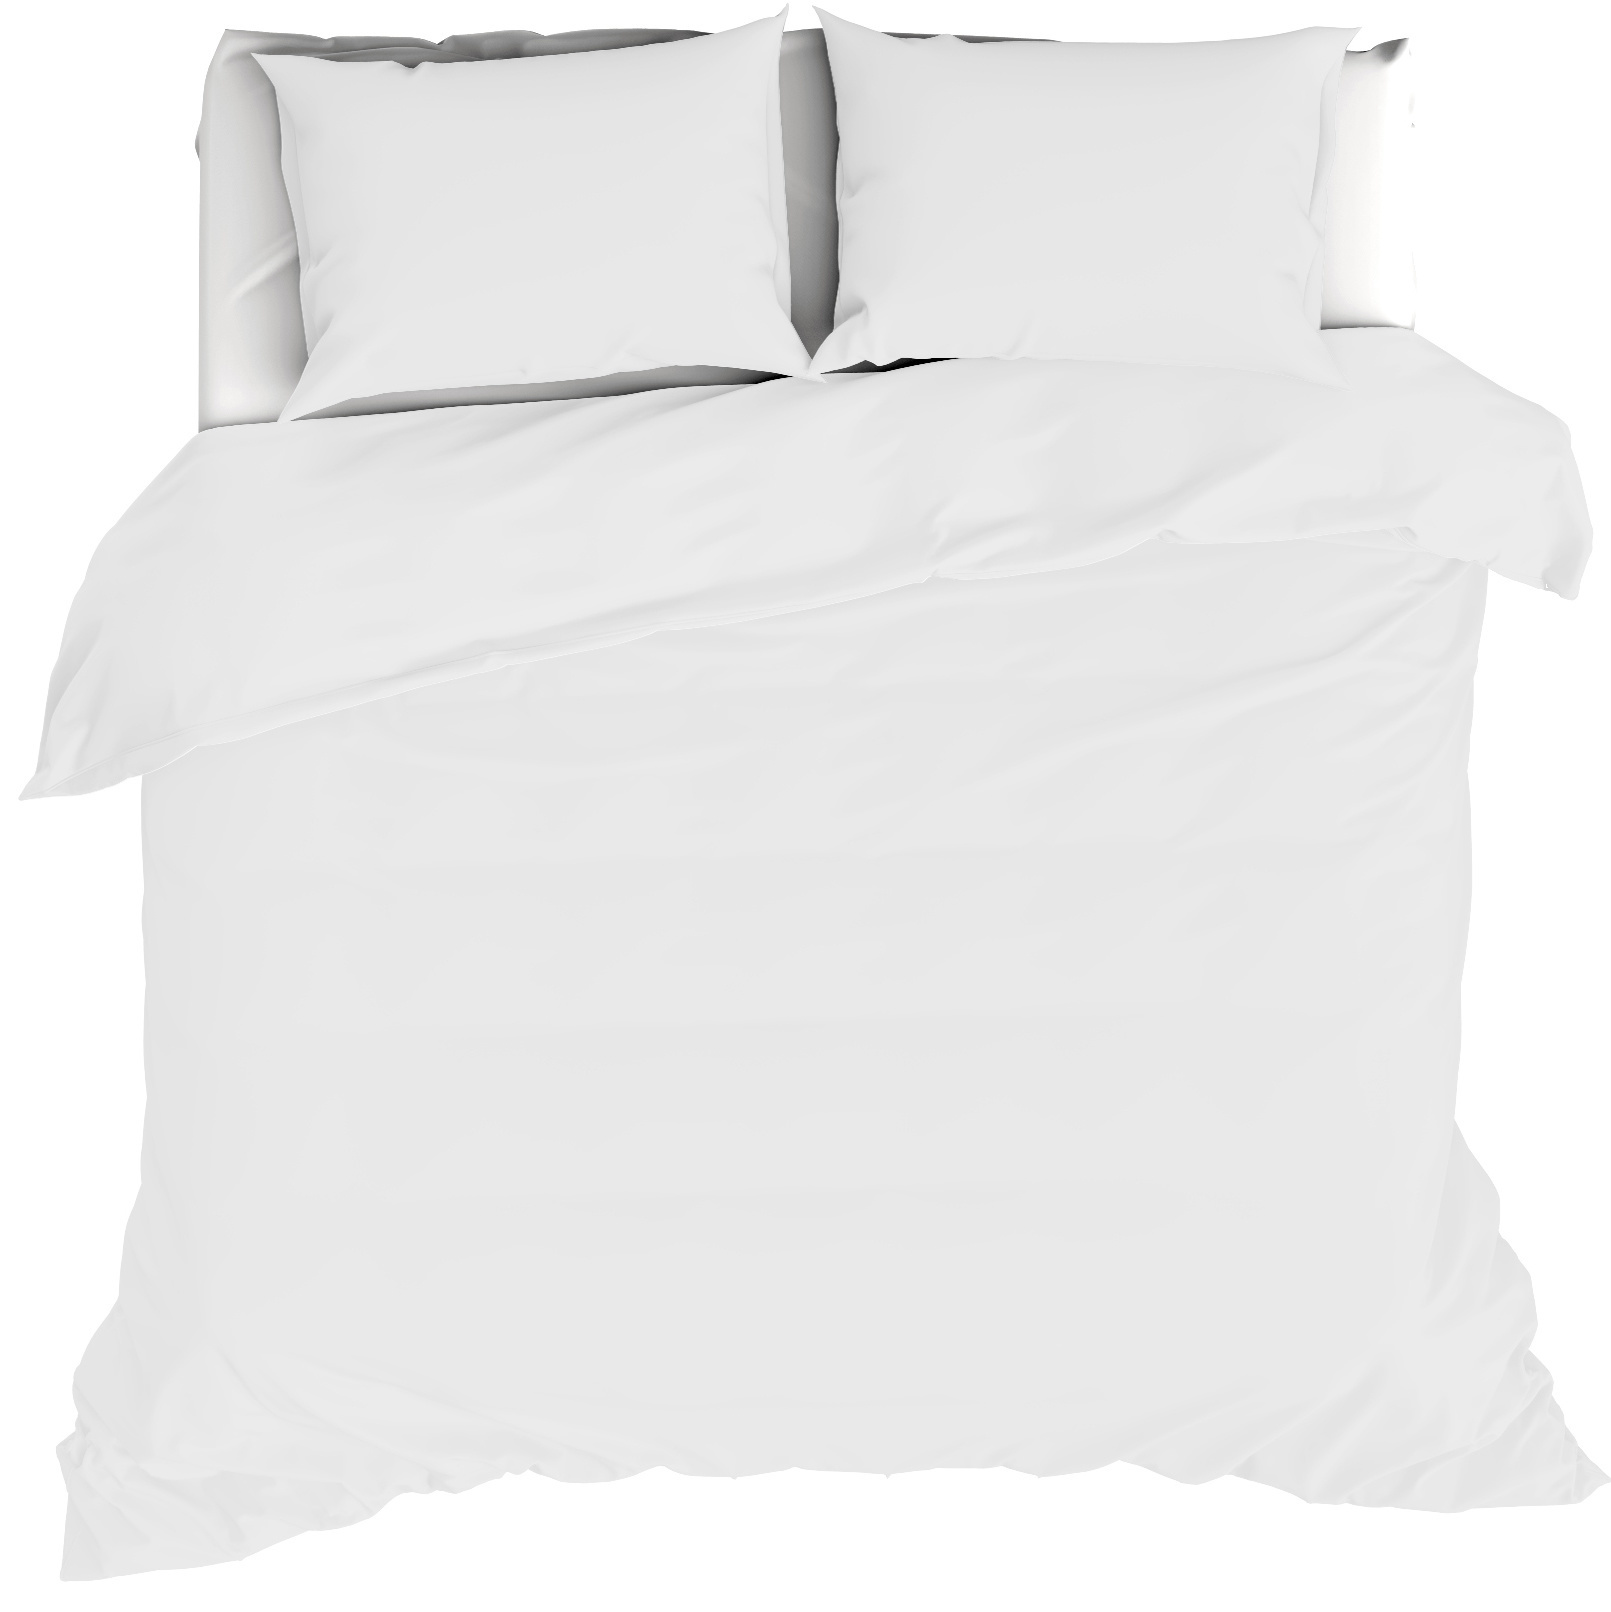 Moodit Duvet cover Basil White - Hotel size - 260 x 240 cm - Cotton